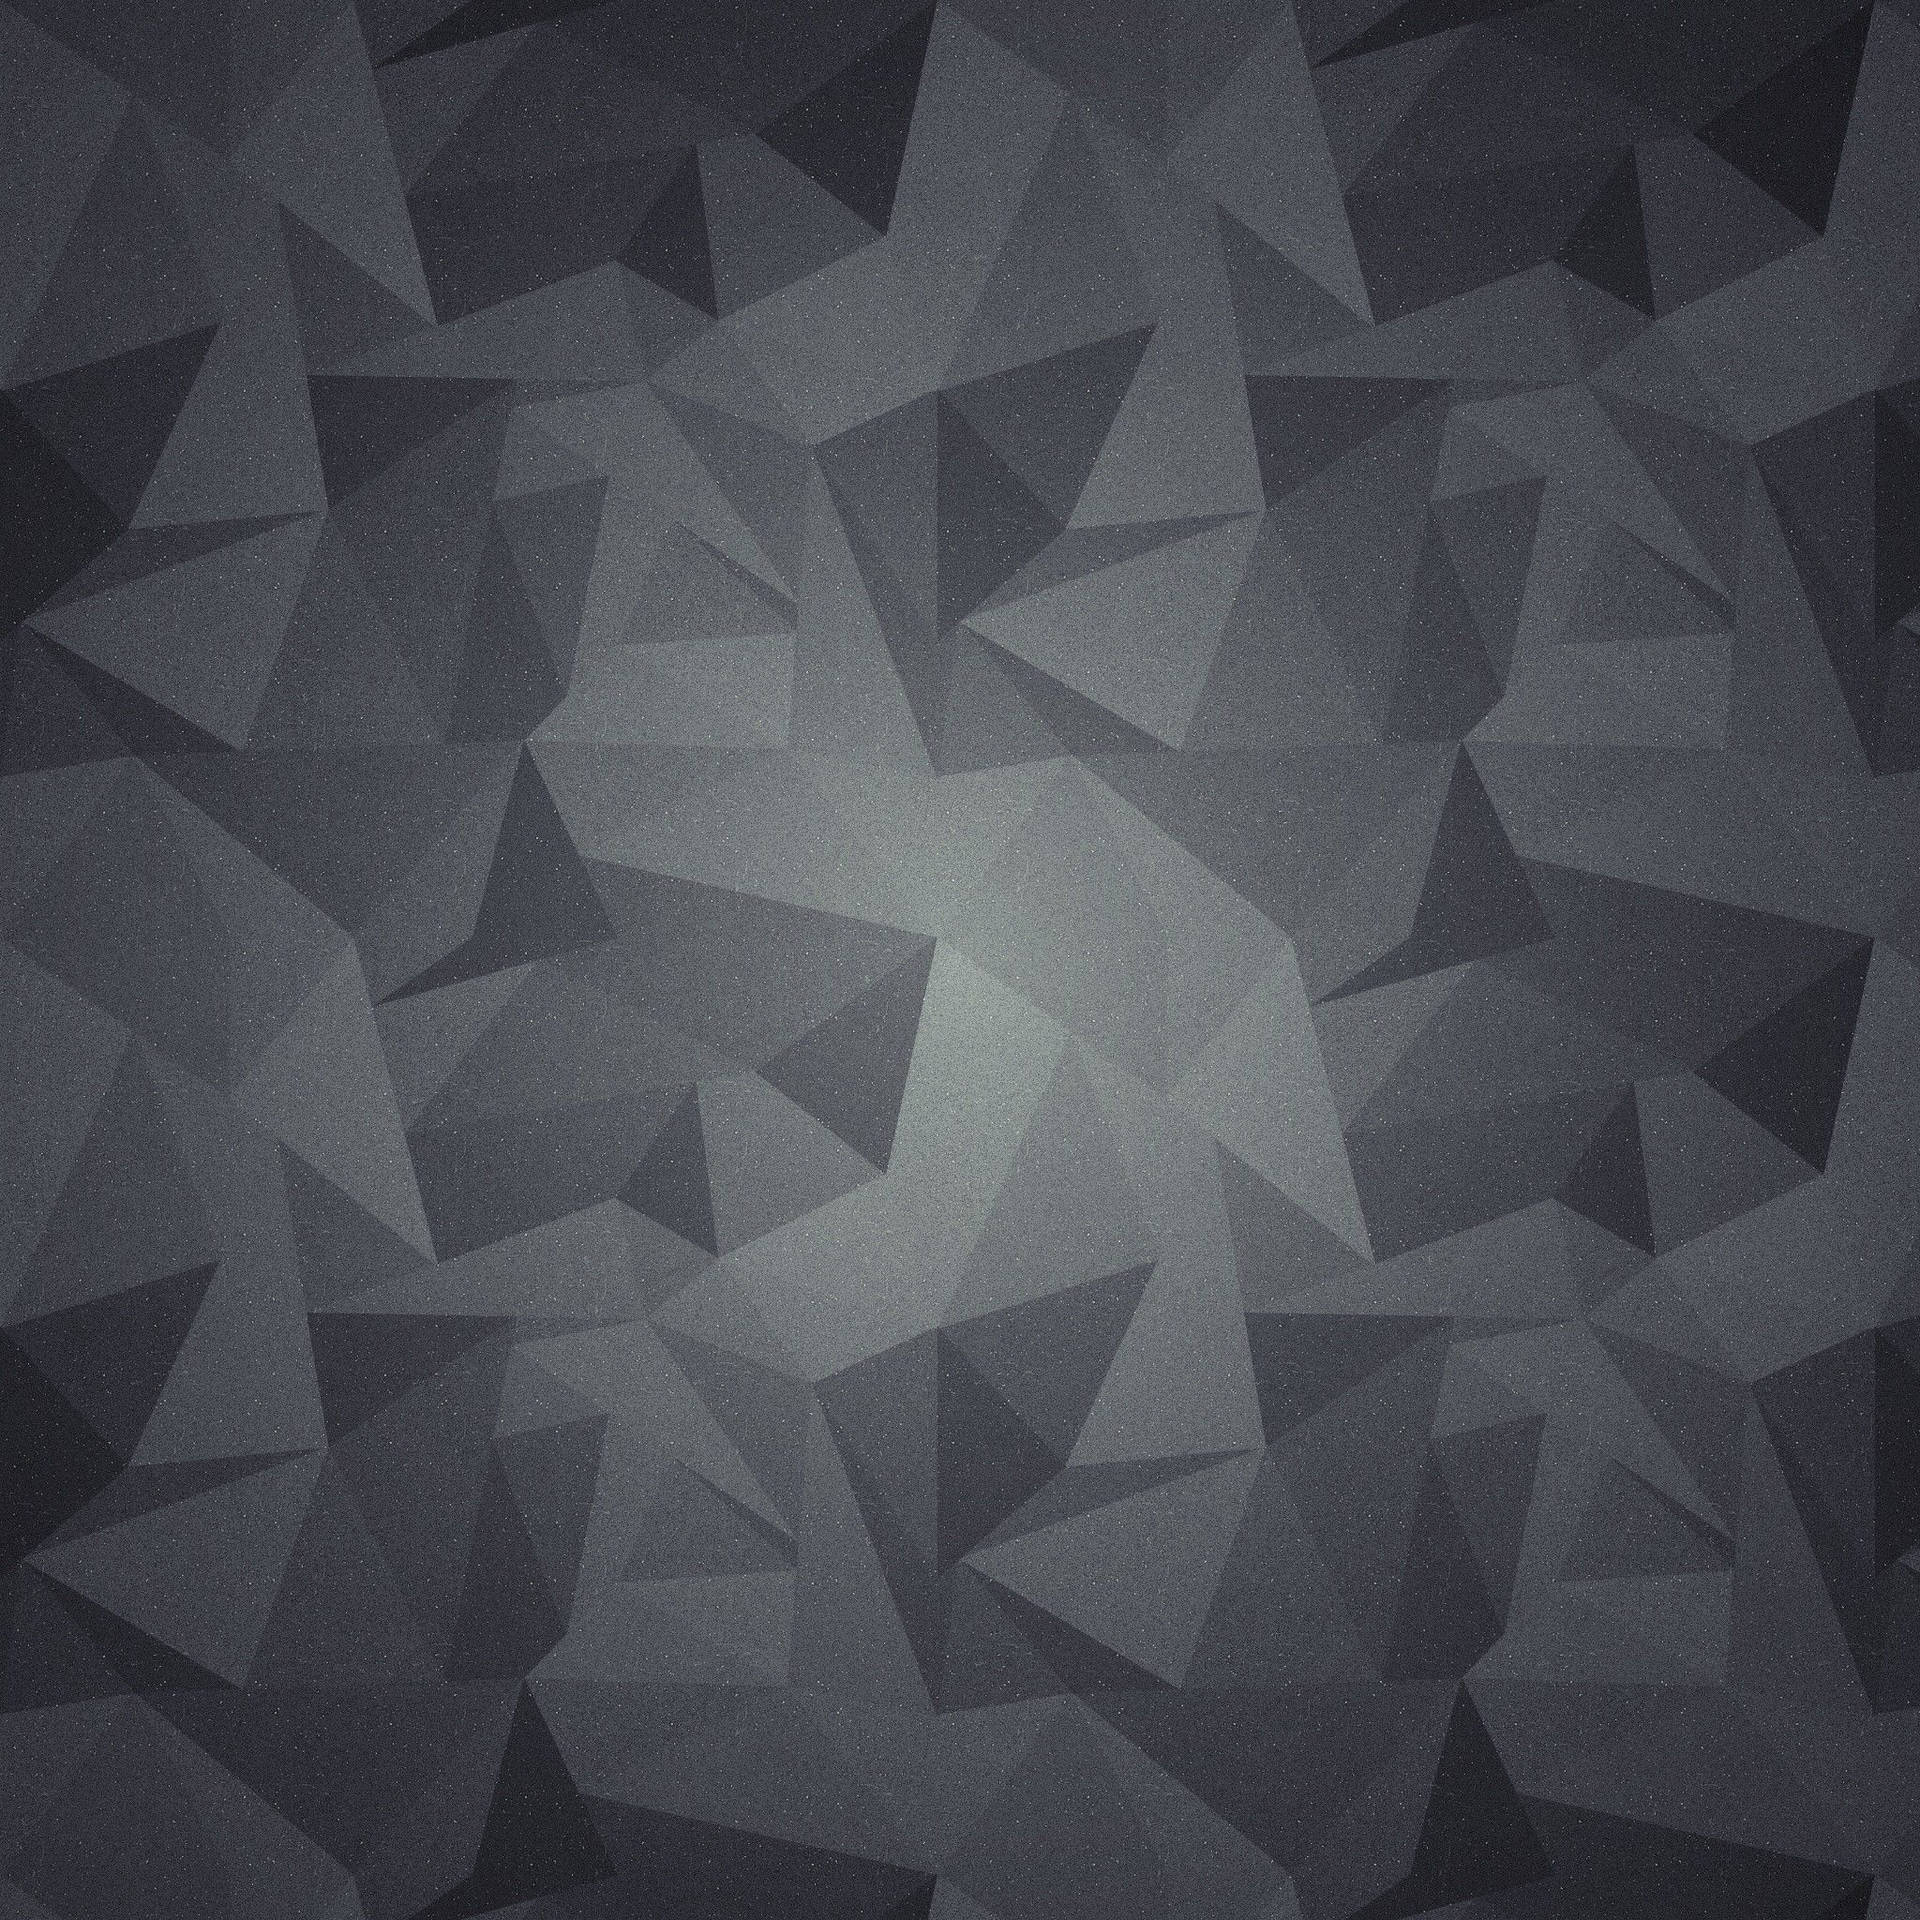 Grey Polygons Ipad Air 4